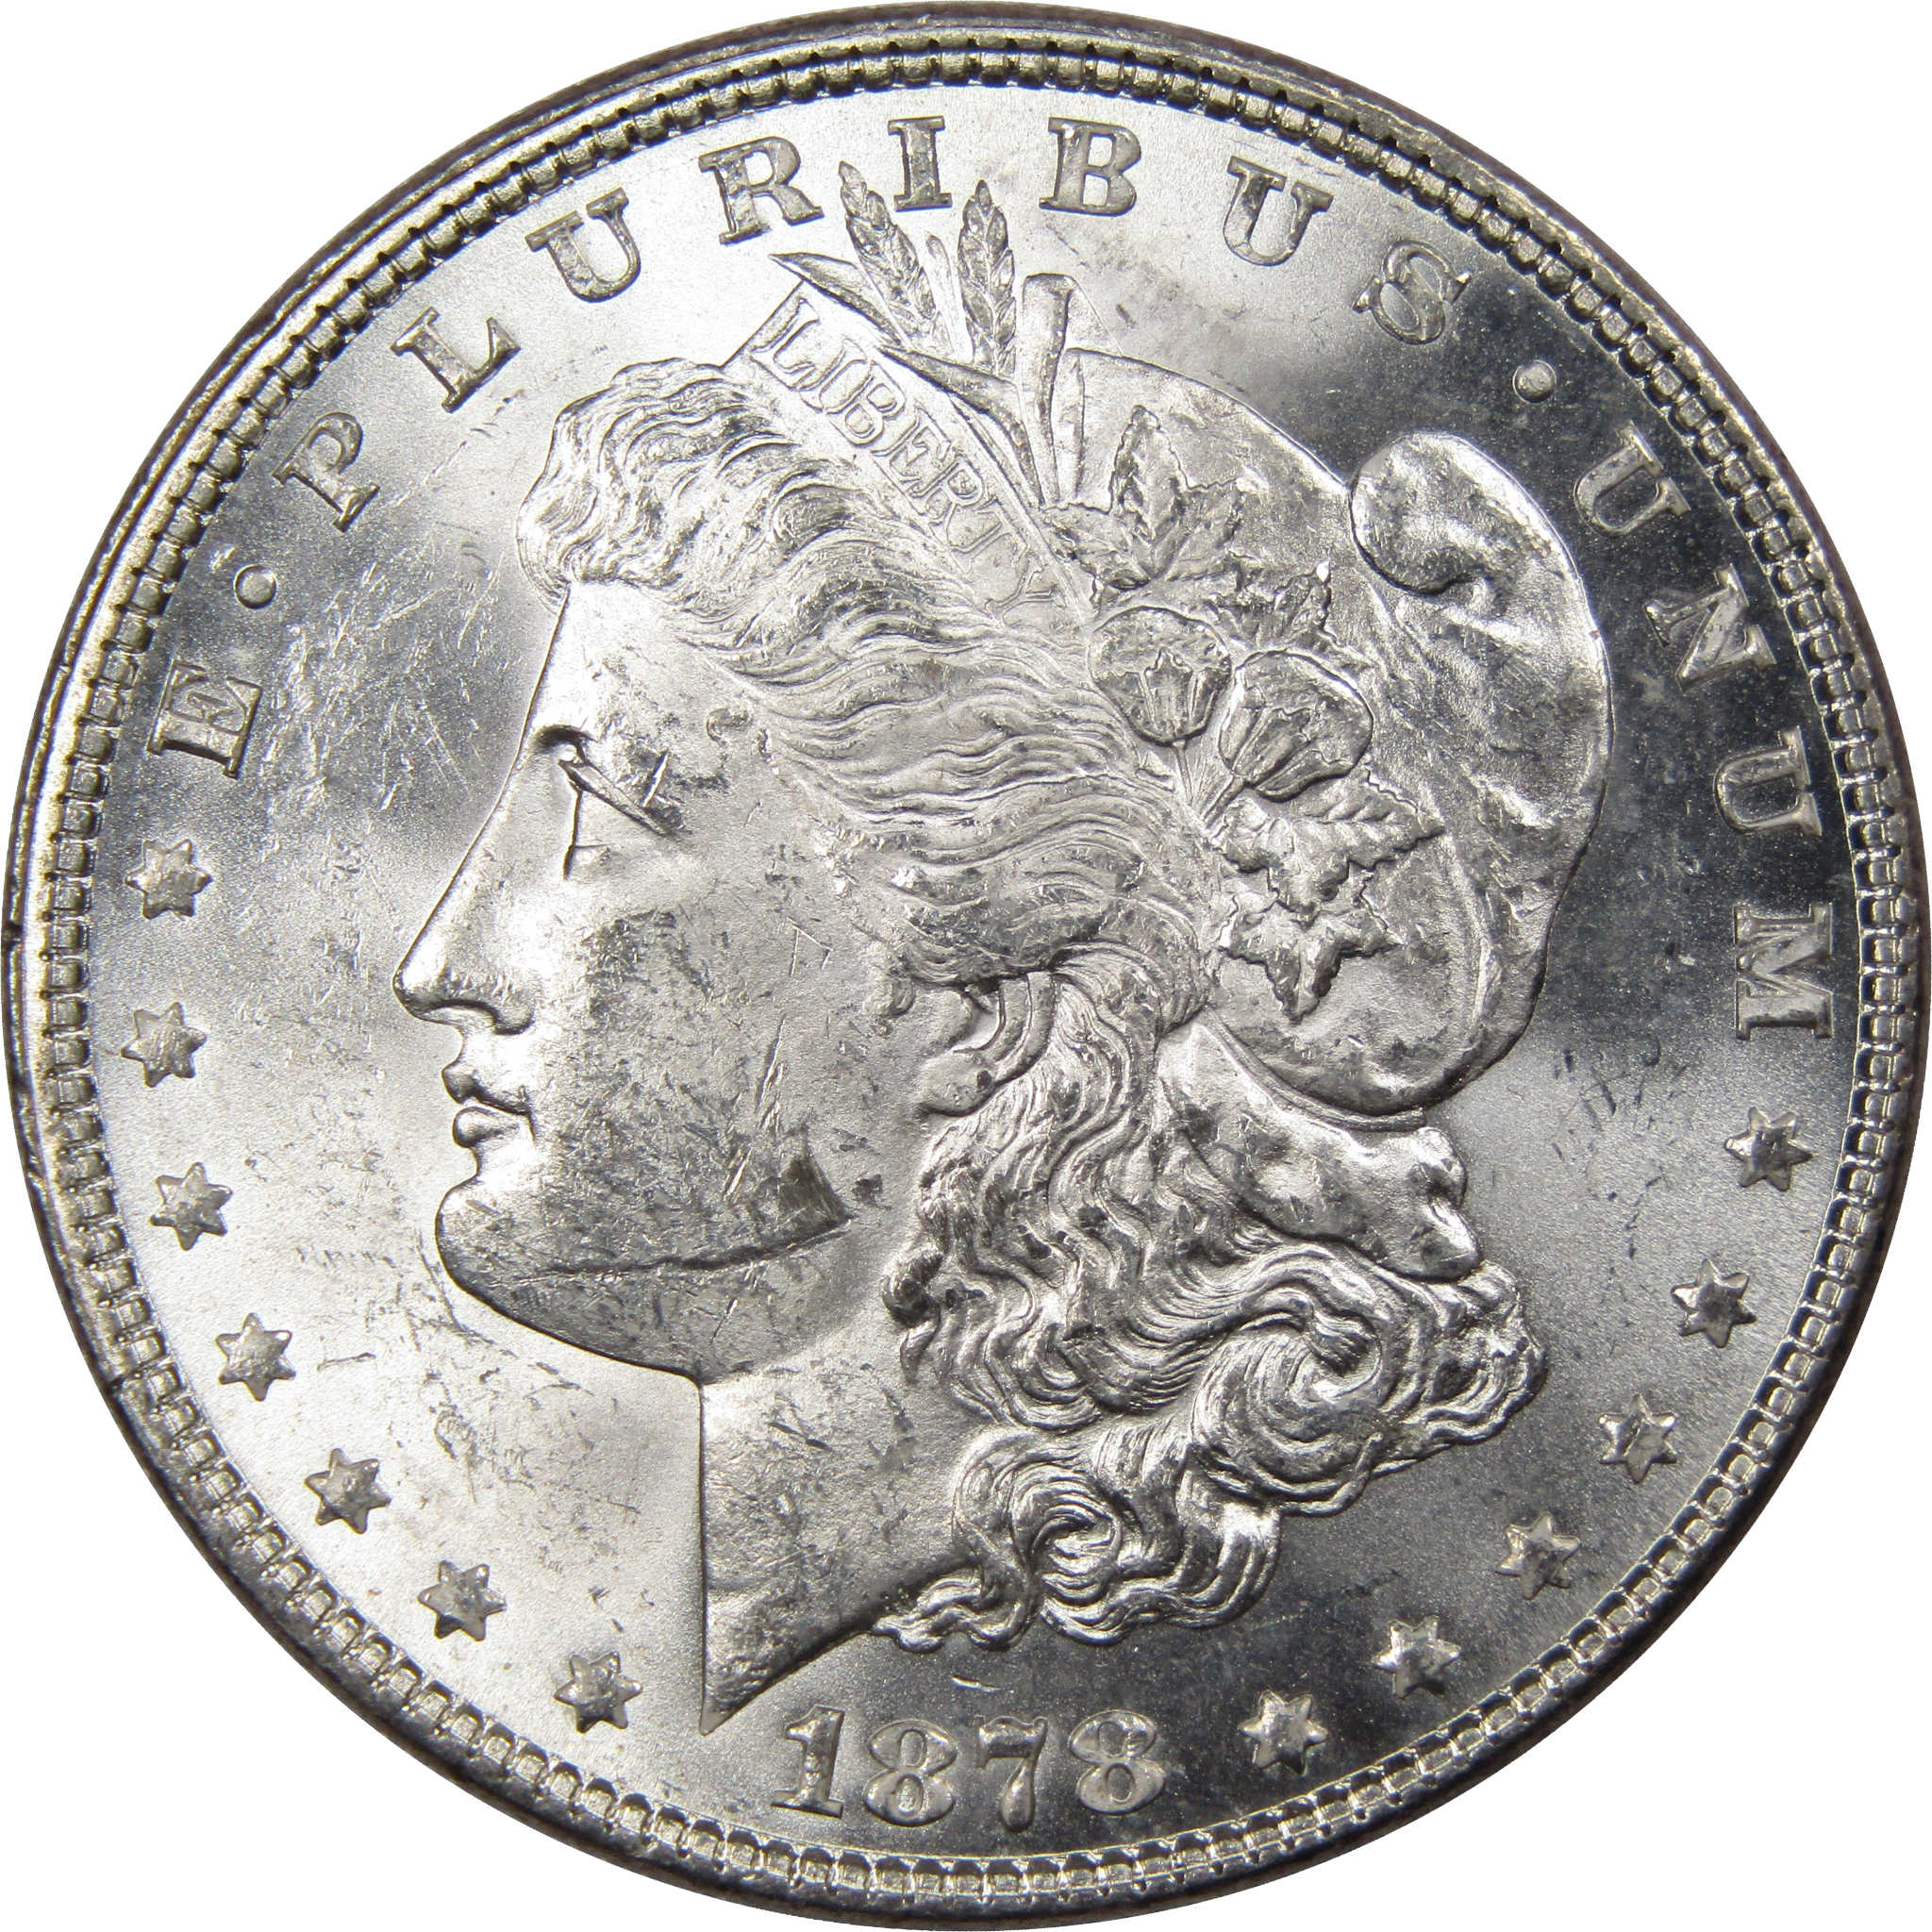 1878 7TF Rev 78 Morgan Dollar Uncirculated Mint State Silver SKU:I1652 - Morgan coin - Morgan silver dollar - Morgan silver dollar for sale - Profile Coins &amp; Collectibles